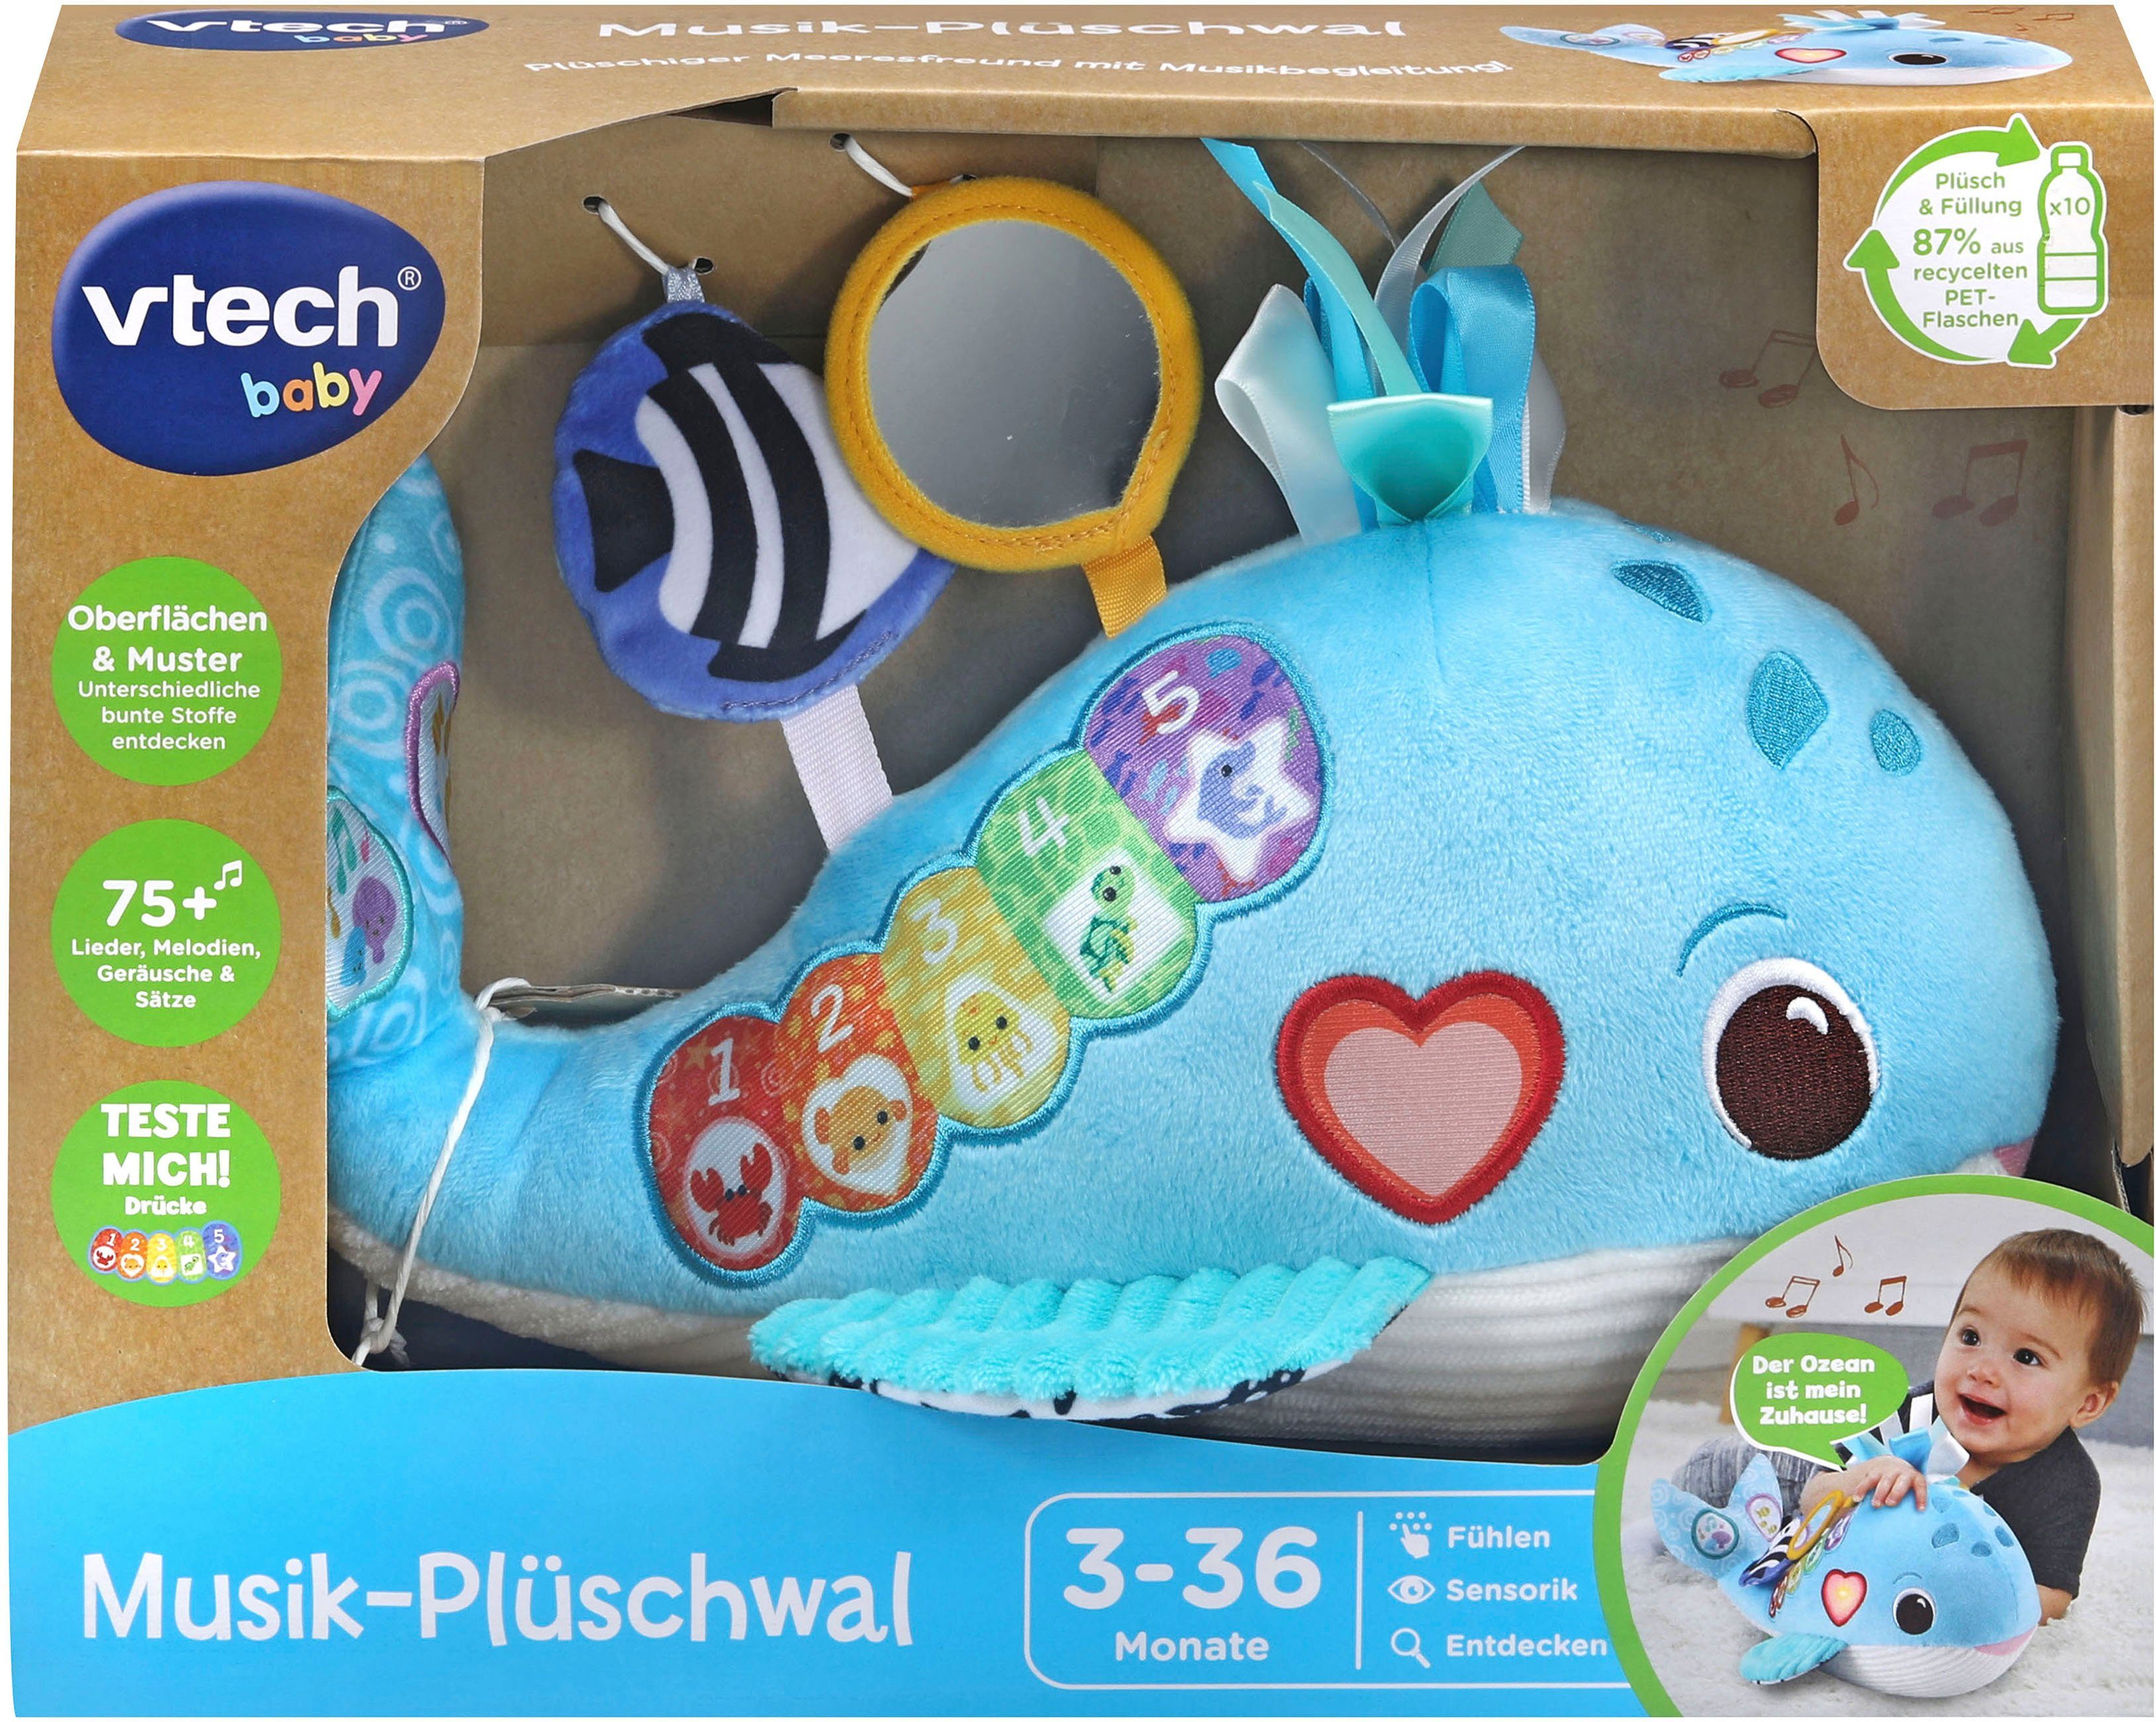 Vtech® Plüschfigur Vtech Baby, aus recyceltem Musik-Plüschwal, Material